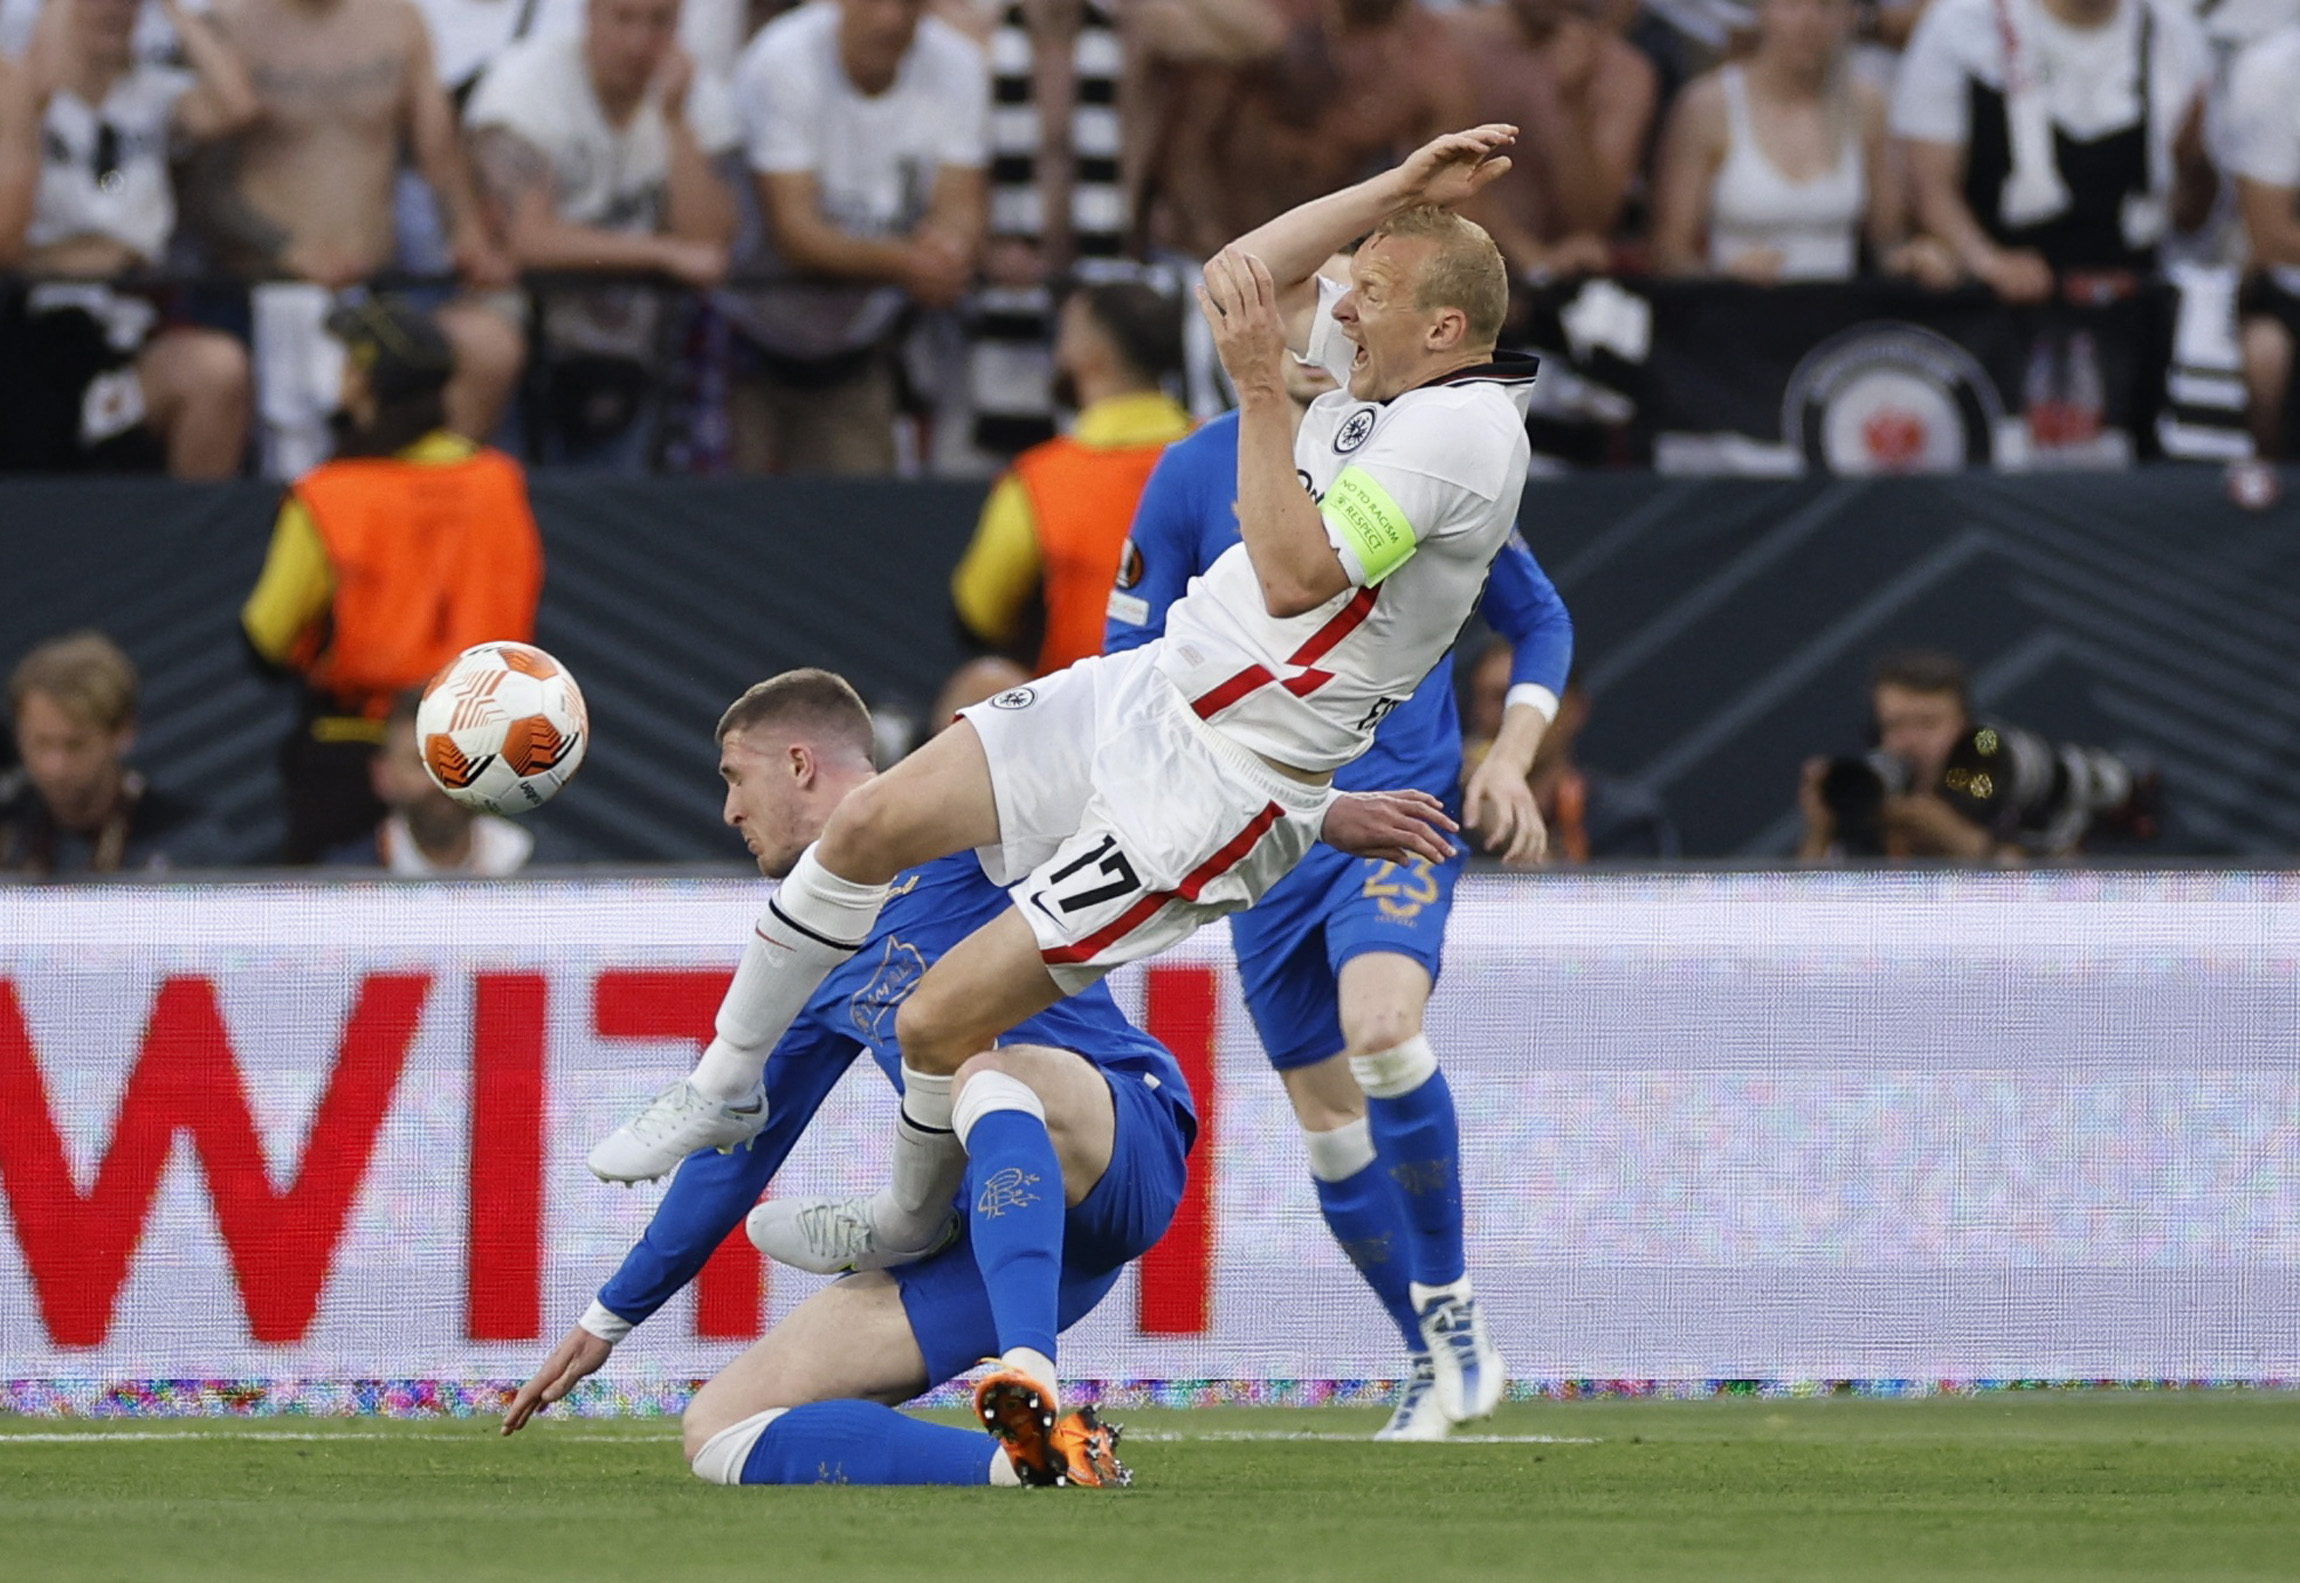 Europa League Final: Eintracht Frankfurt are crowned 2022 UEFA Europa League WINNERS after beating Rangers 5-4 on penalties, Rafael Borre scores the winning penalty, Watch HIGHLIGHTS